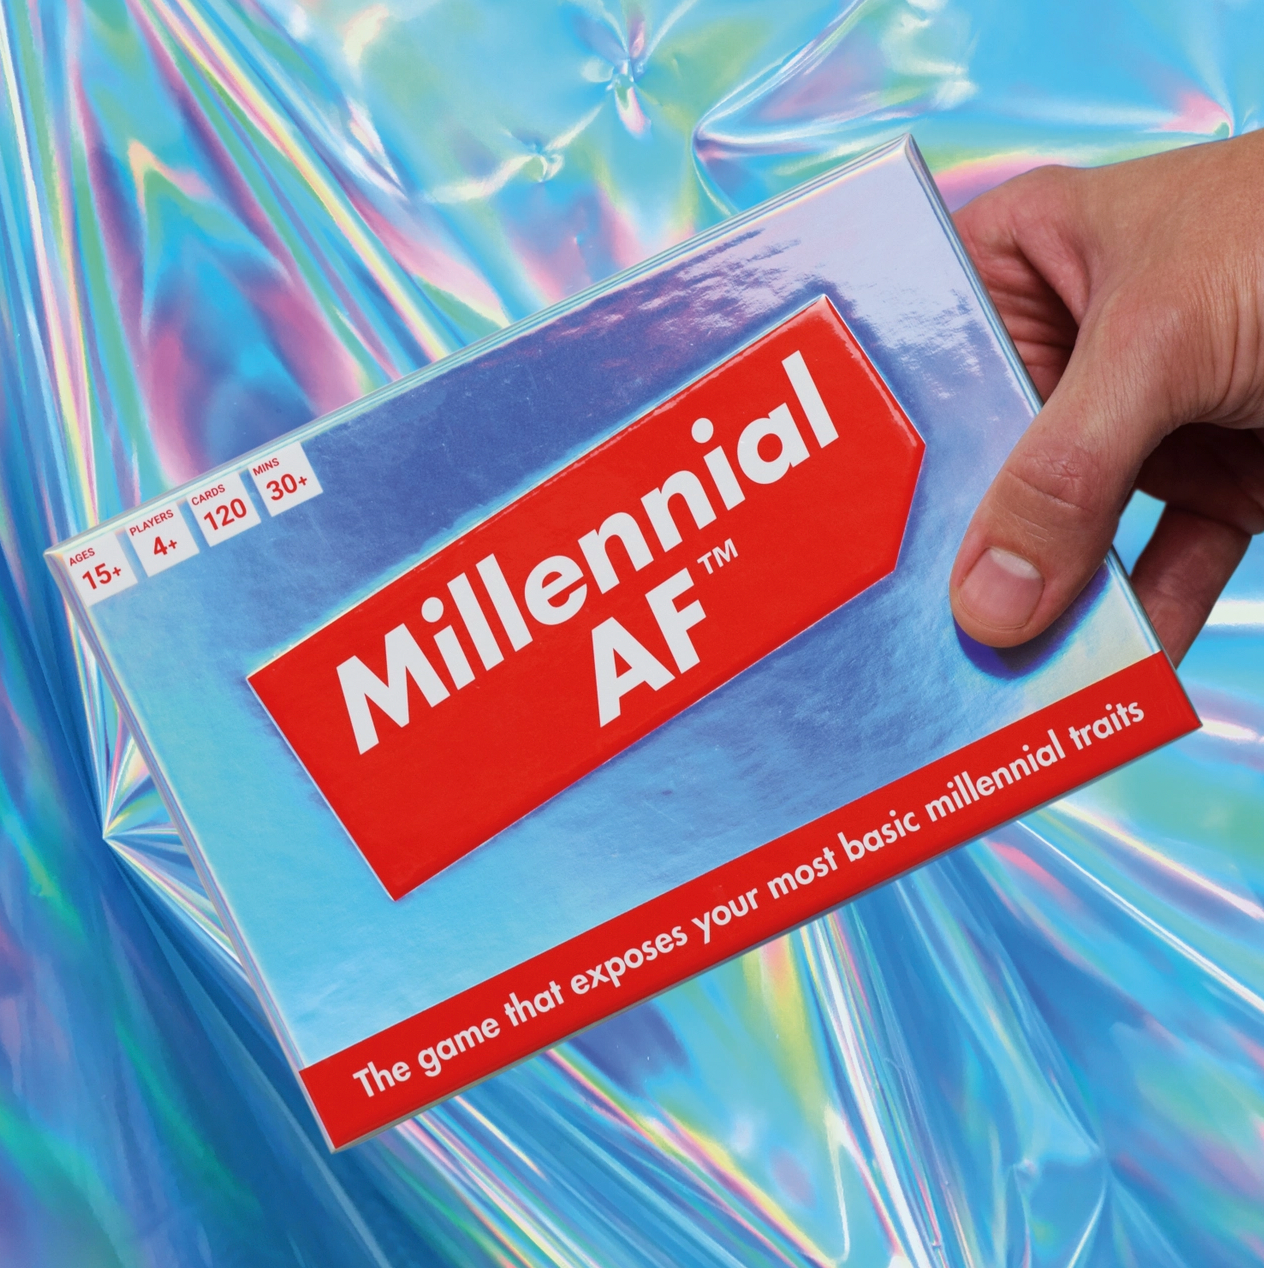 Millennial AF Party Game